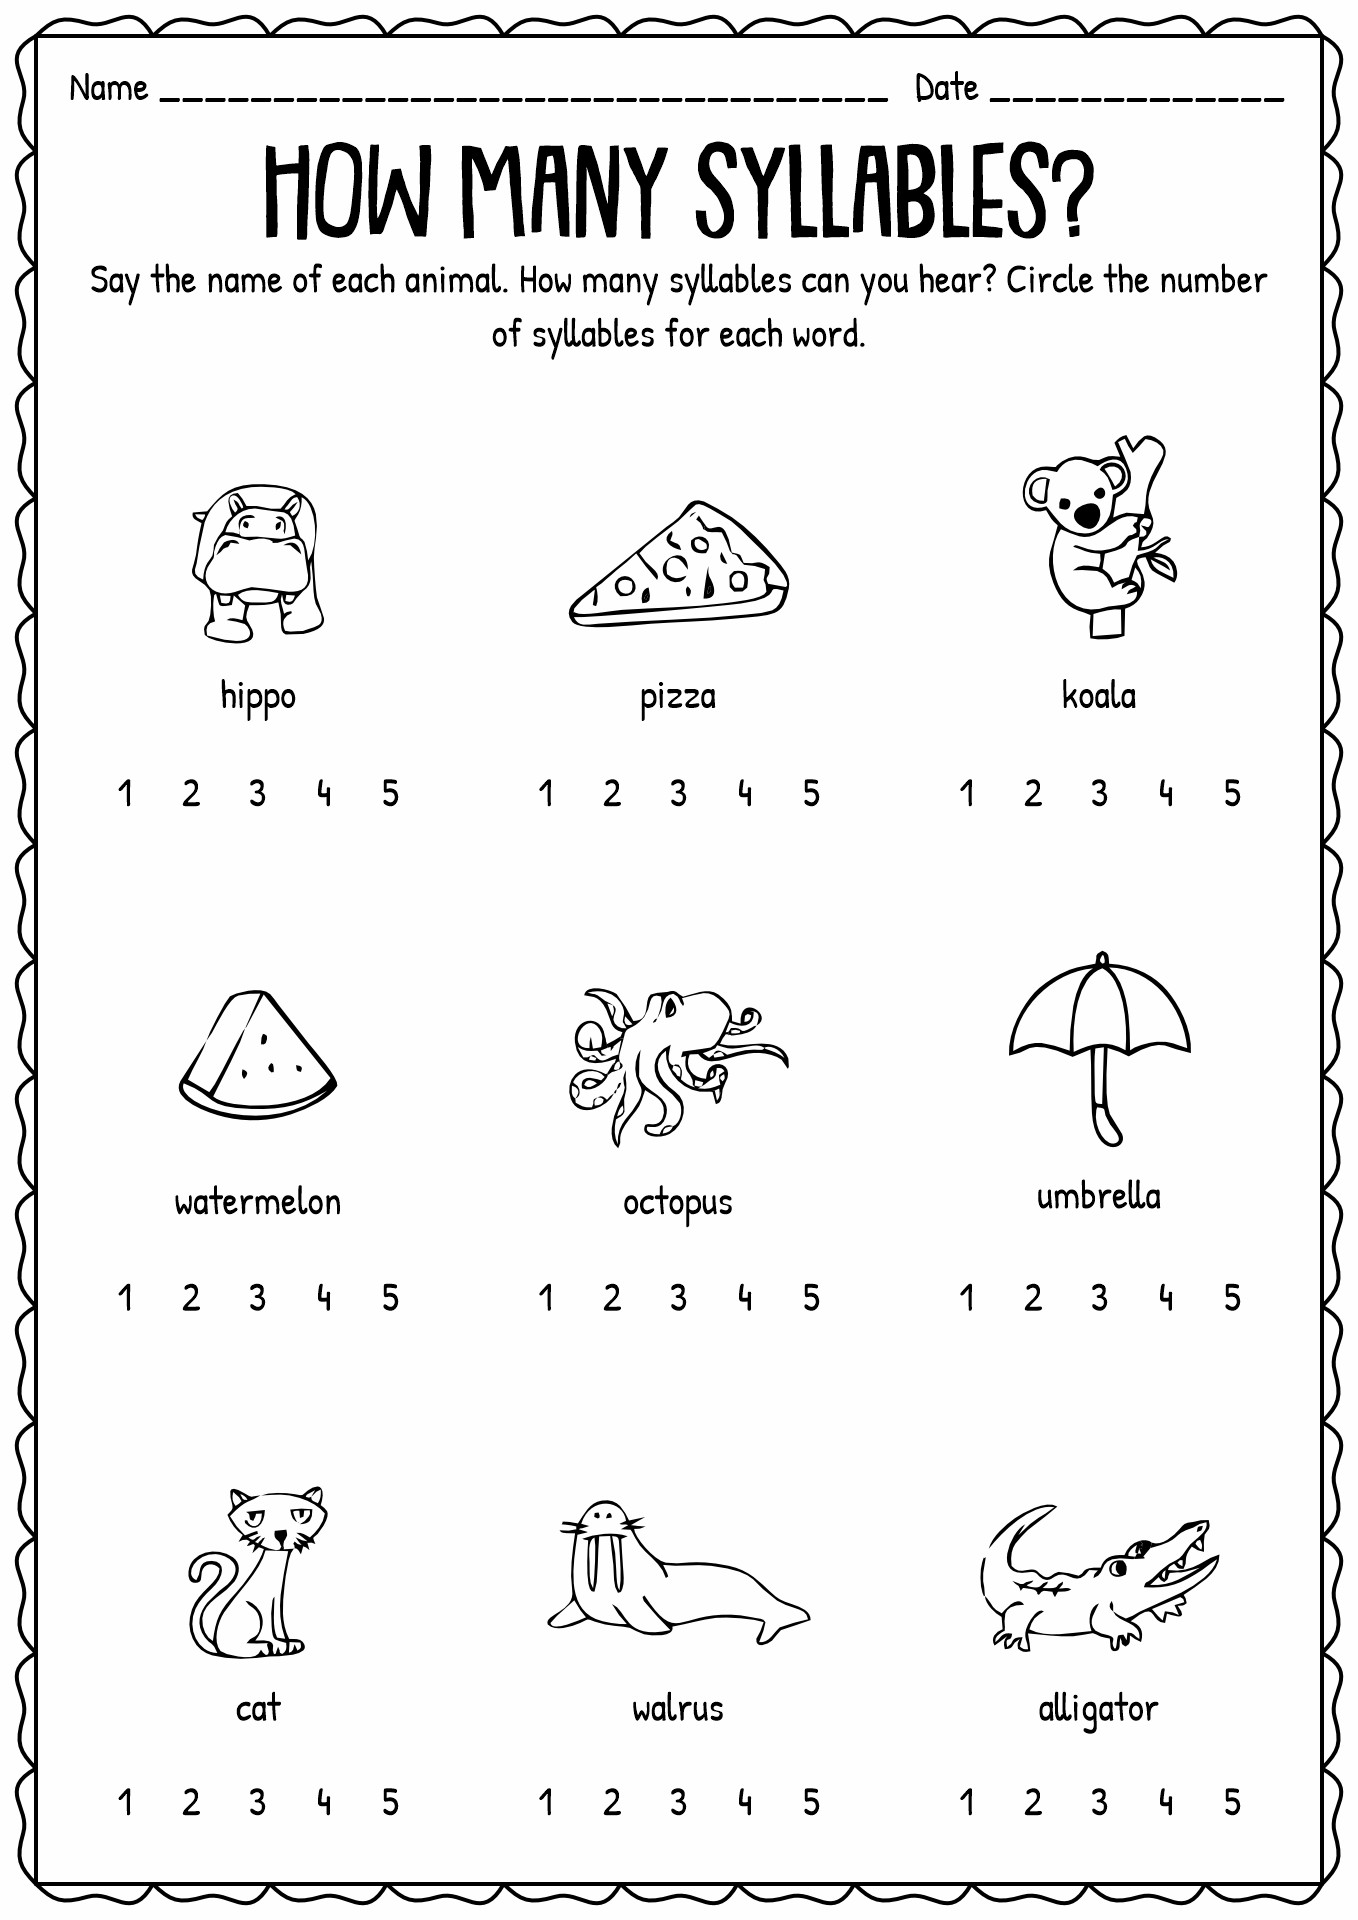 syllable-count-worksheet-have-fun-teaching